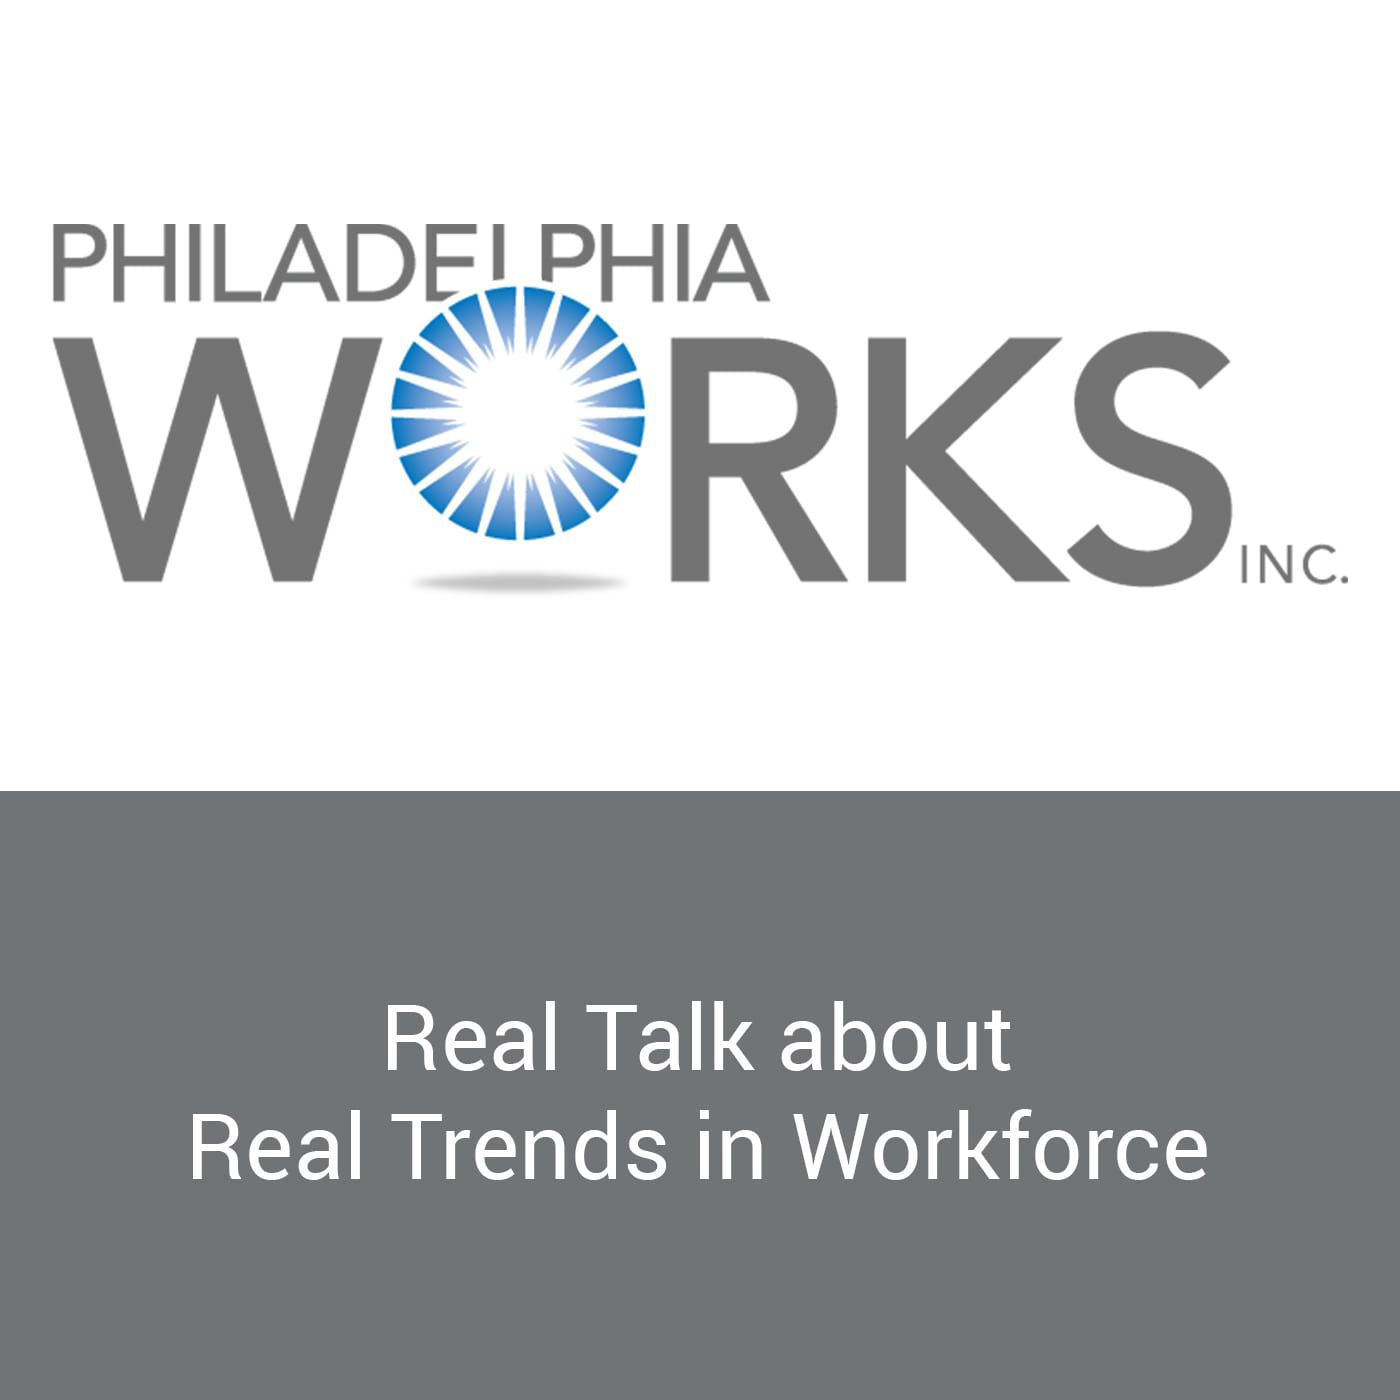 Philadelphia Works